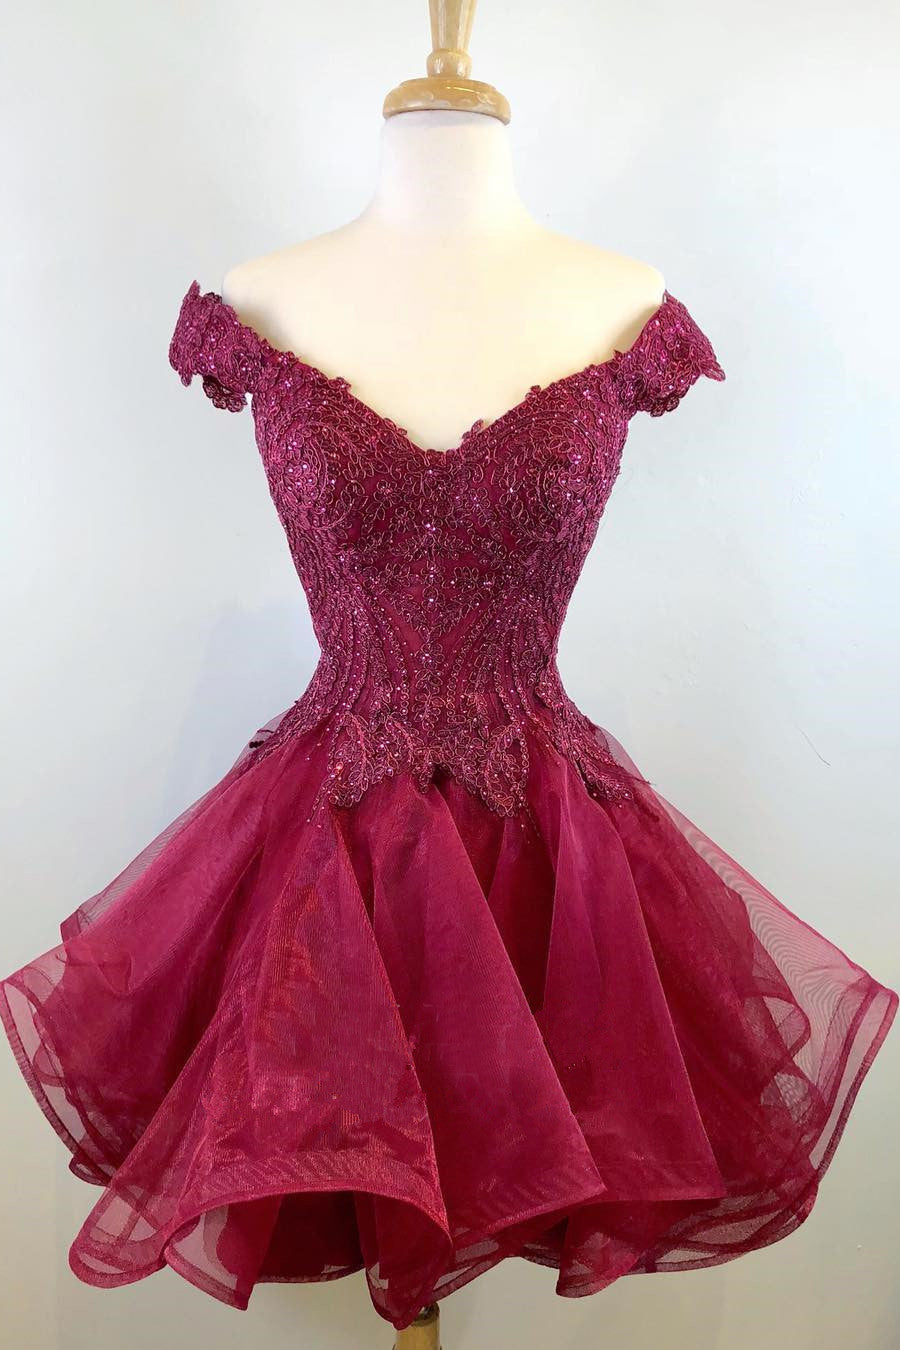 Bridesmaid Dresses Mismatched Summer, Princess Off the Shoulder Wine Red Short Homecoming Dress